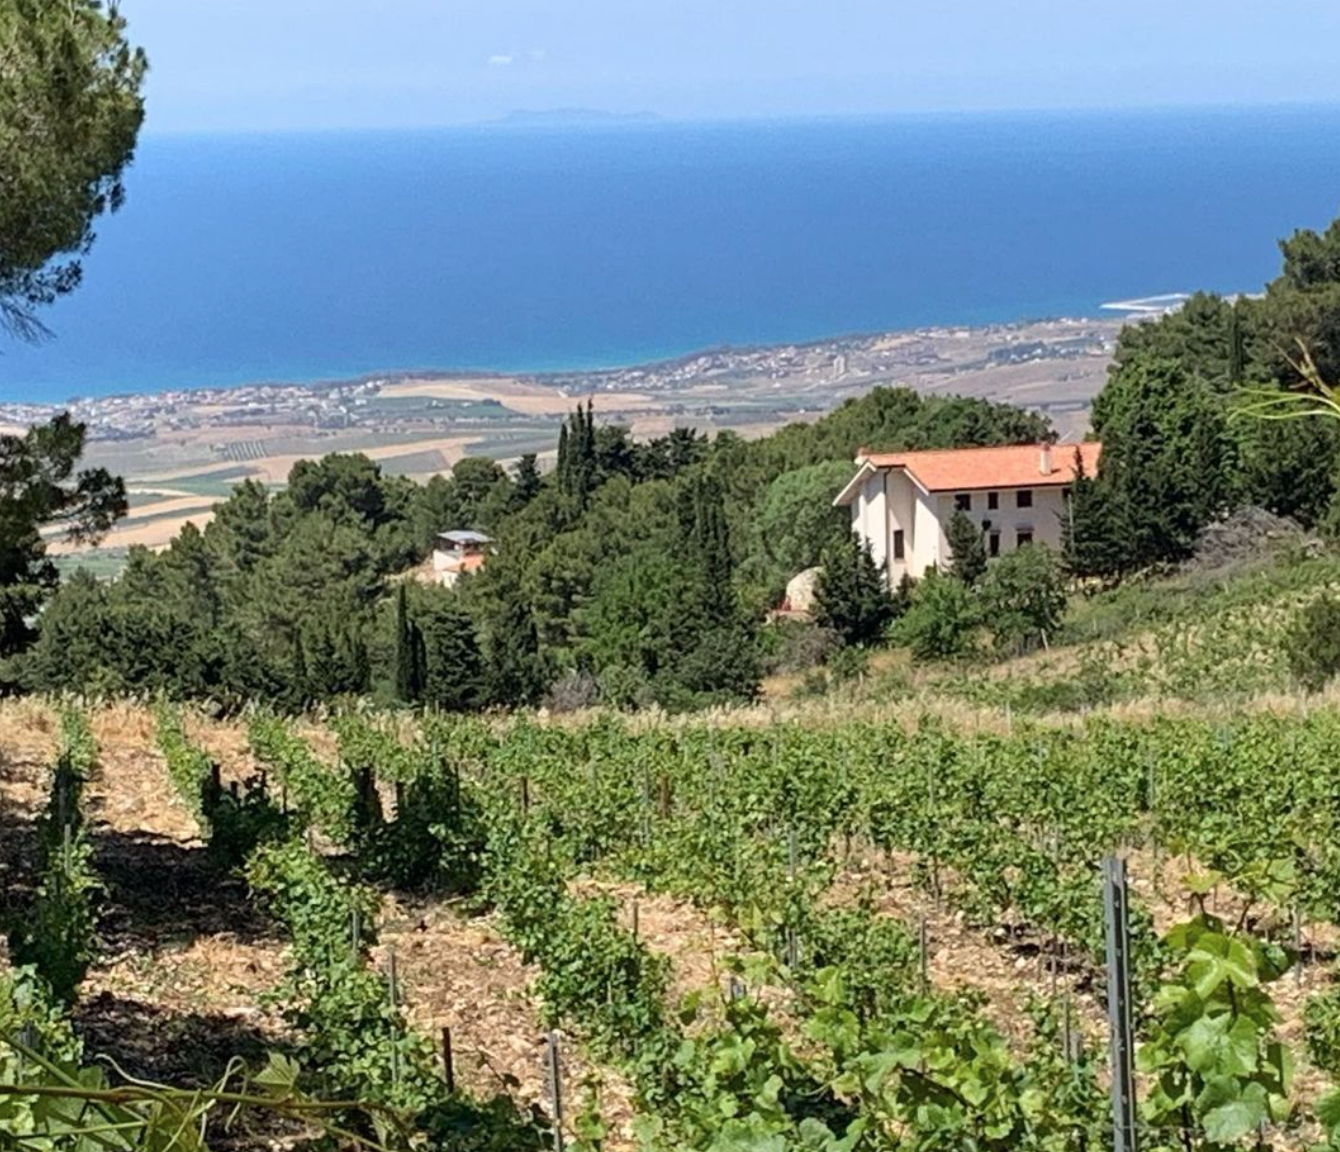 Artisanal Craft and Natural Wine in Alcamo, Sicily: Alessandro Viola and Luigi Stalteri